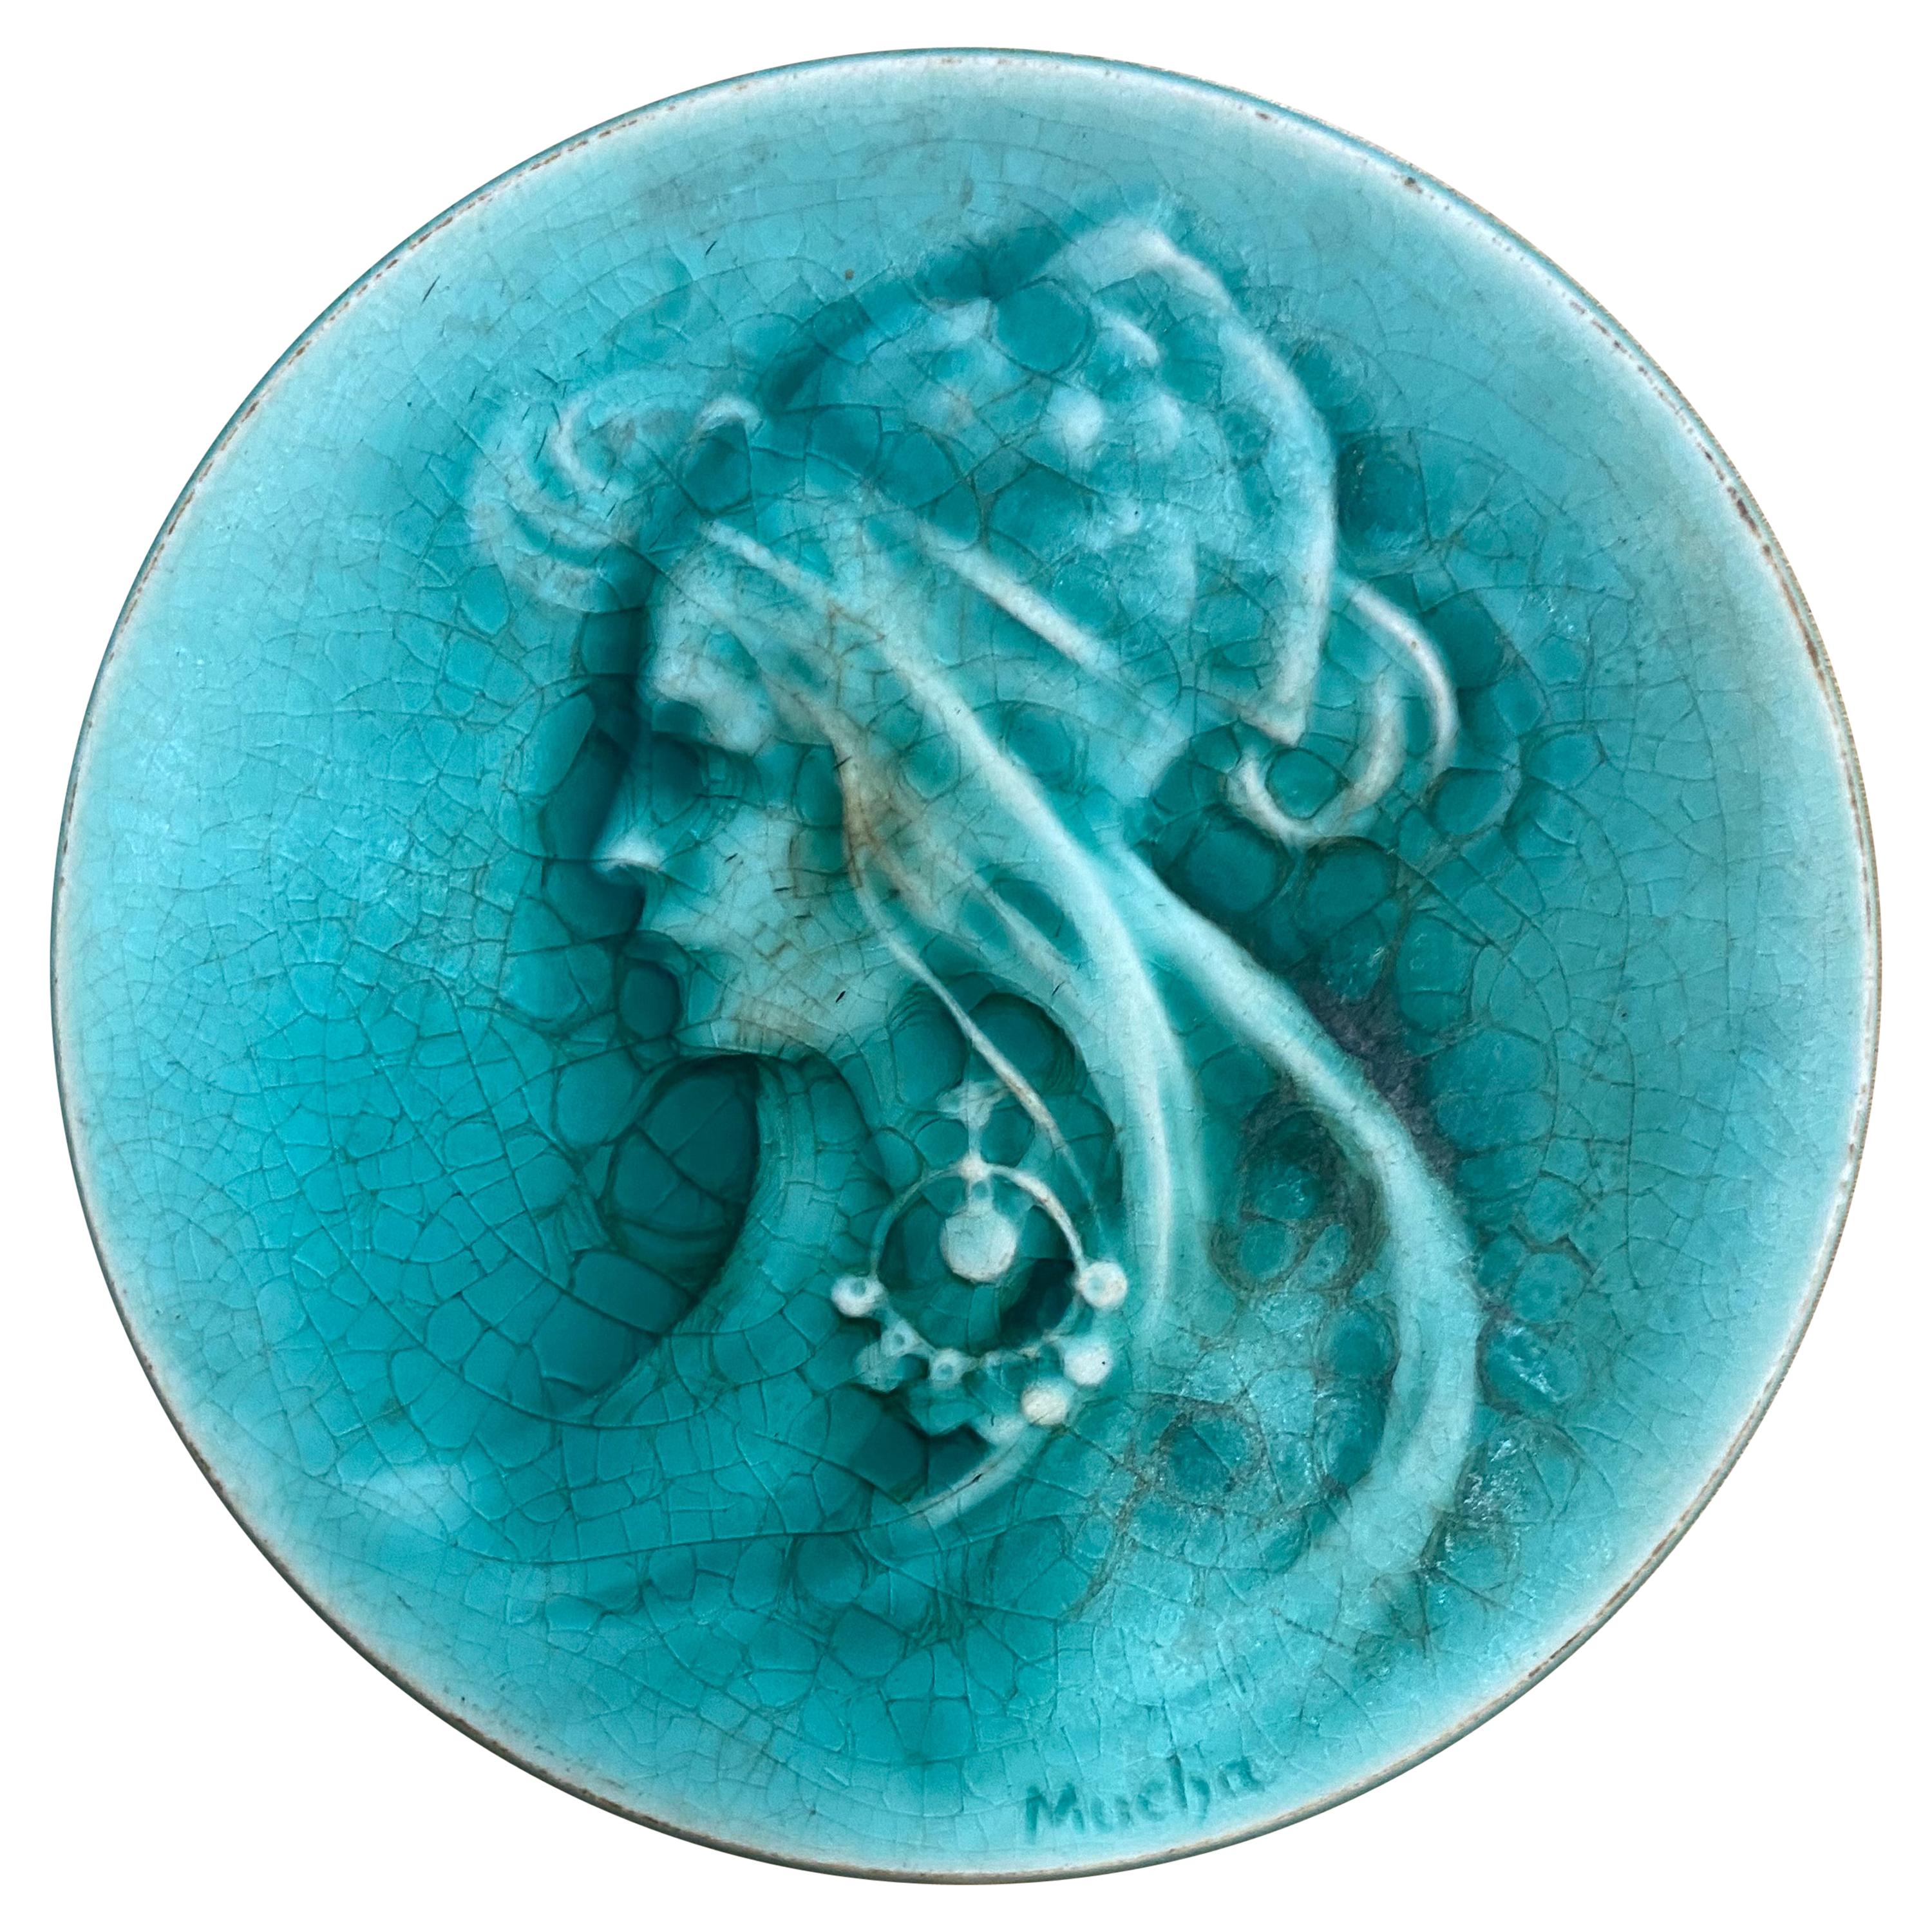 Mucha, Art Nouveau Ceramic Representing Sarah Bernard, Signed "MUCHA", 1900